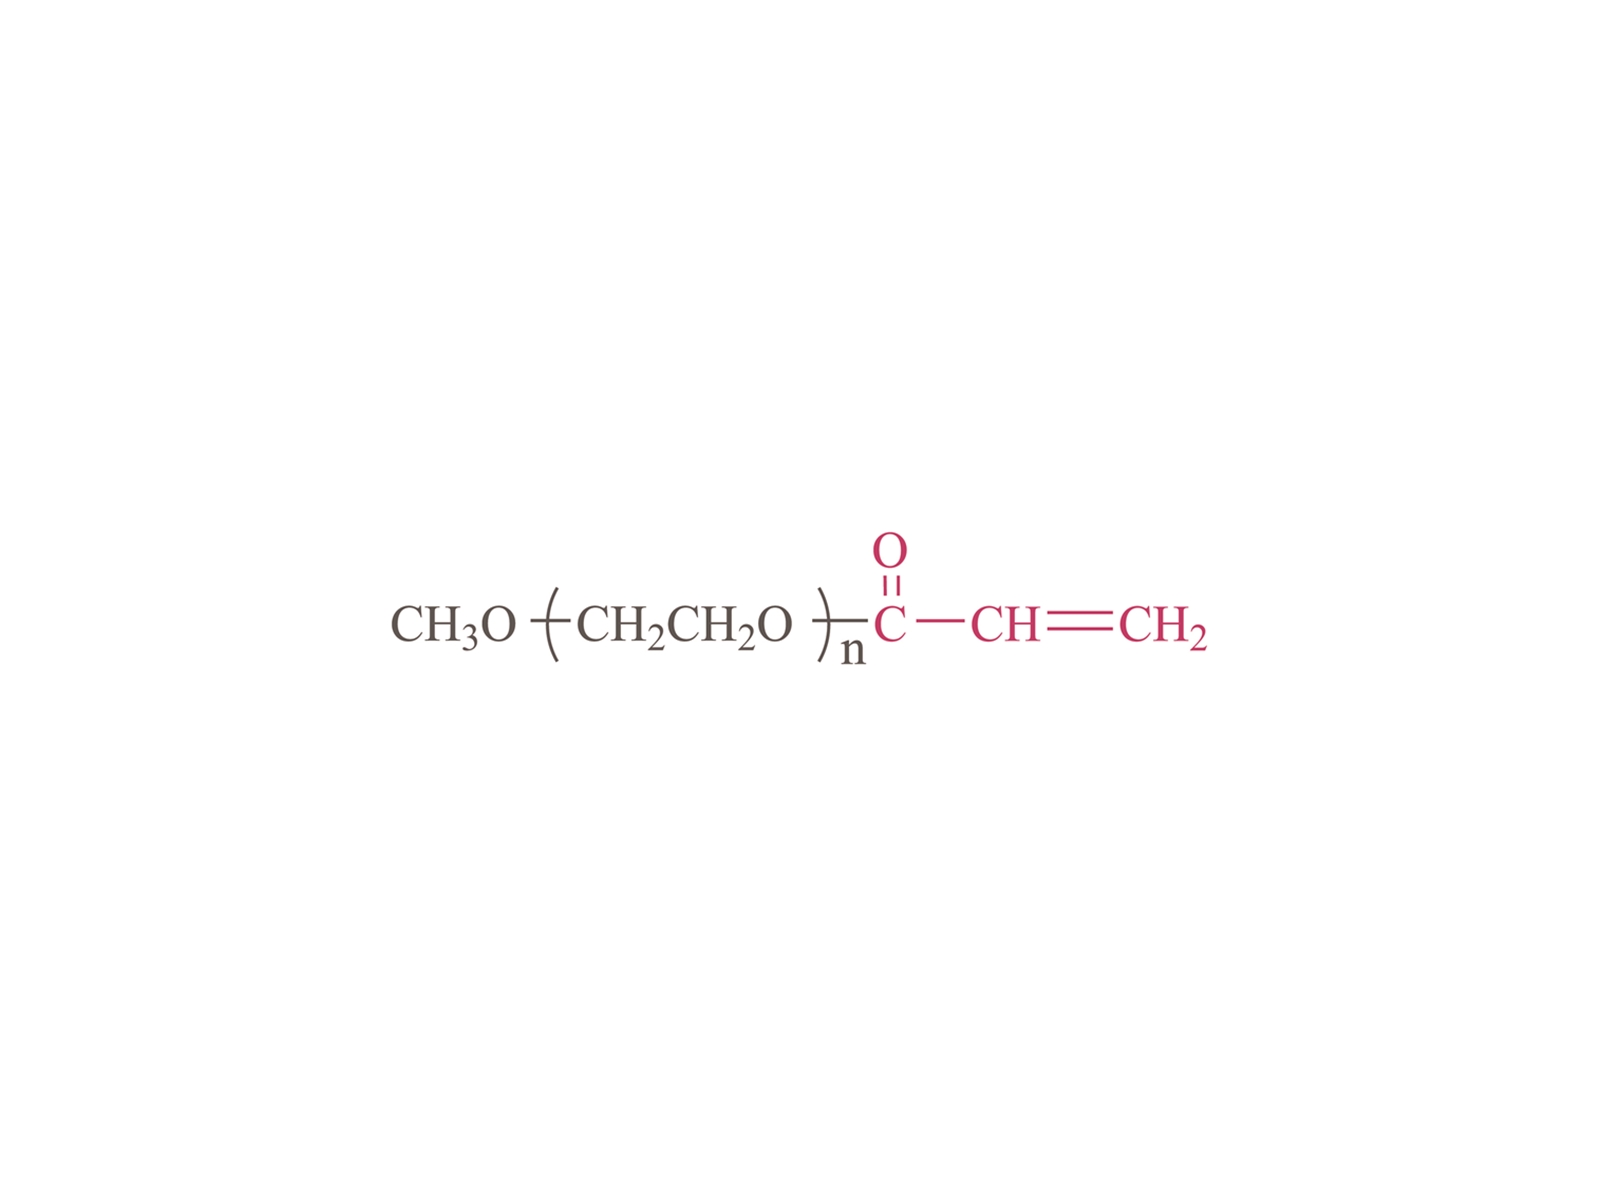 Methoxypoly (Ethylene Glycol) Acrylate [MPEG-AA] CAS: 32171-39-4